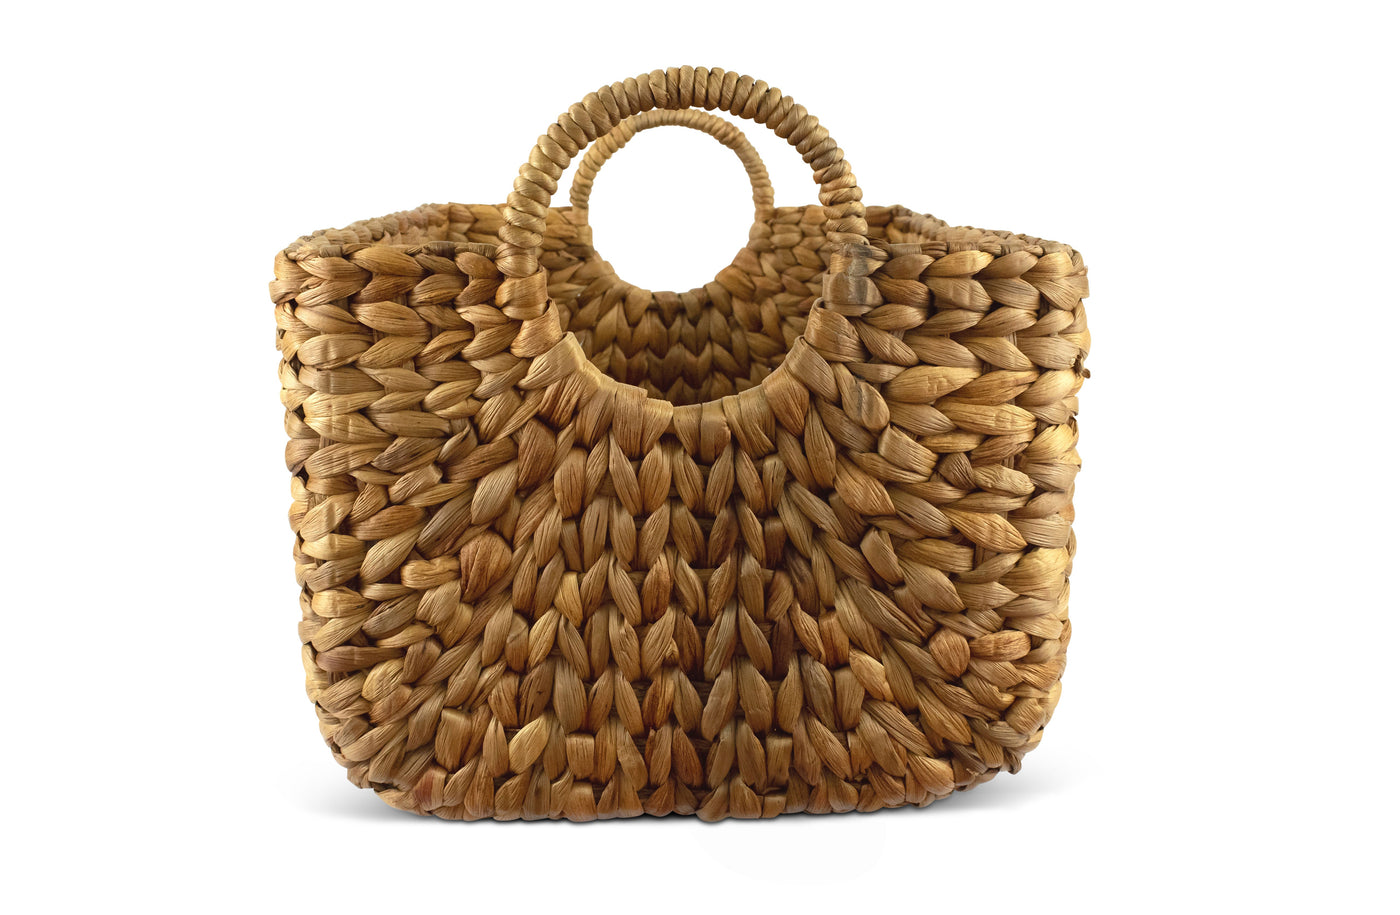 Large Hand Woven Water Hyacinth Storage Basket Shelf Organizer Rectangular Wicker Baskets with Handles 15 x 11 x 11 inches